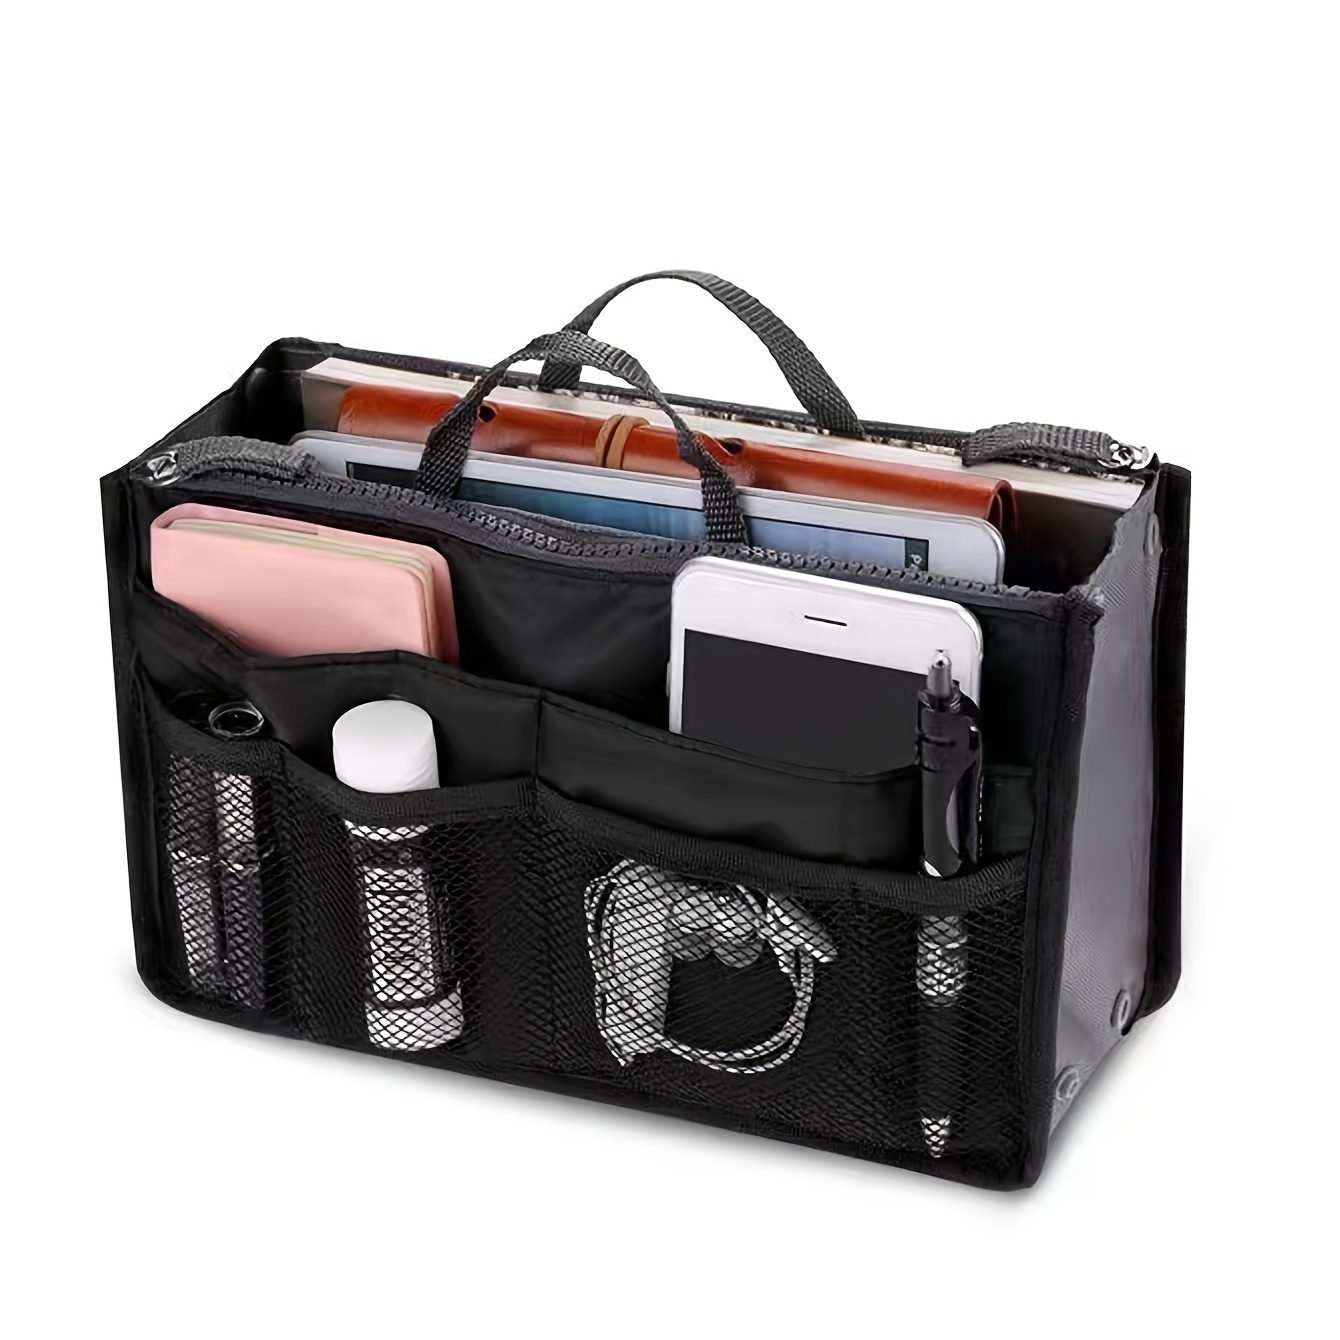 For Classic Flap Insert Organizer Felt Cloth Women Makeup Bag liner Travel  Portable Cosmetic Bag Shaper